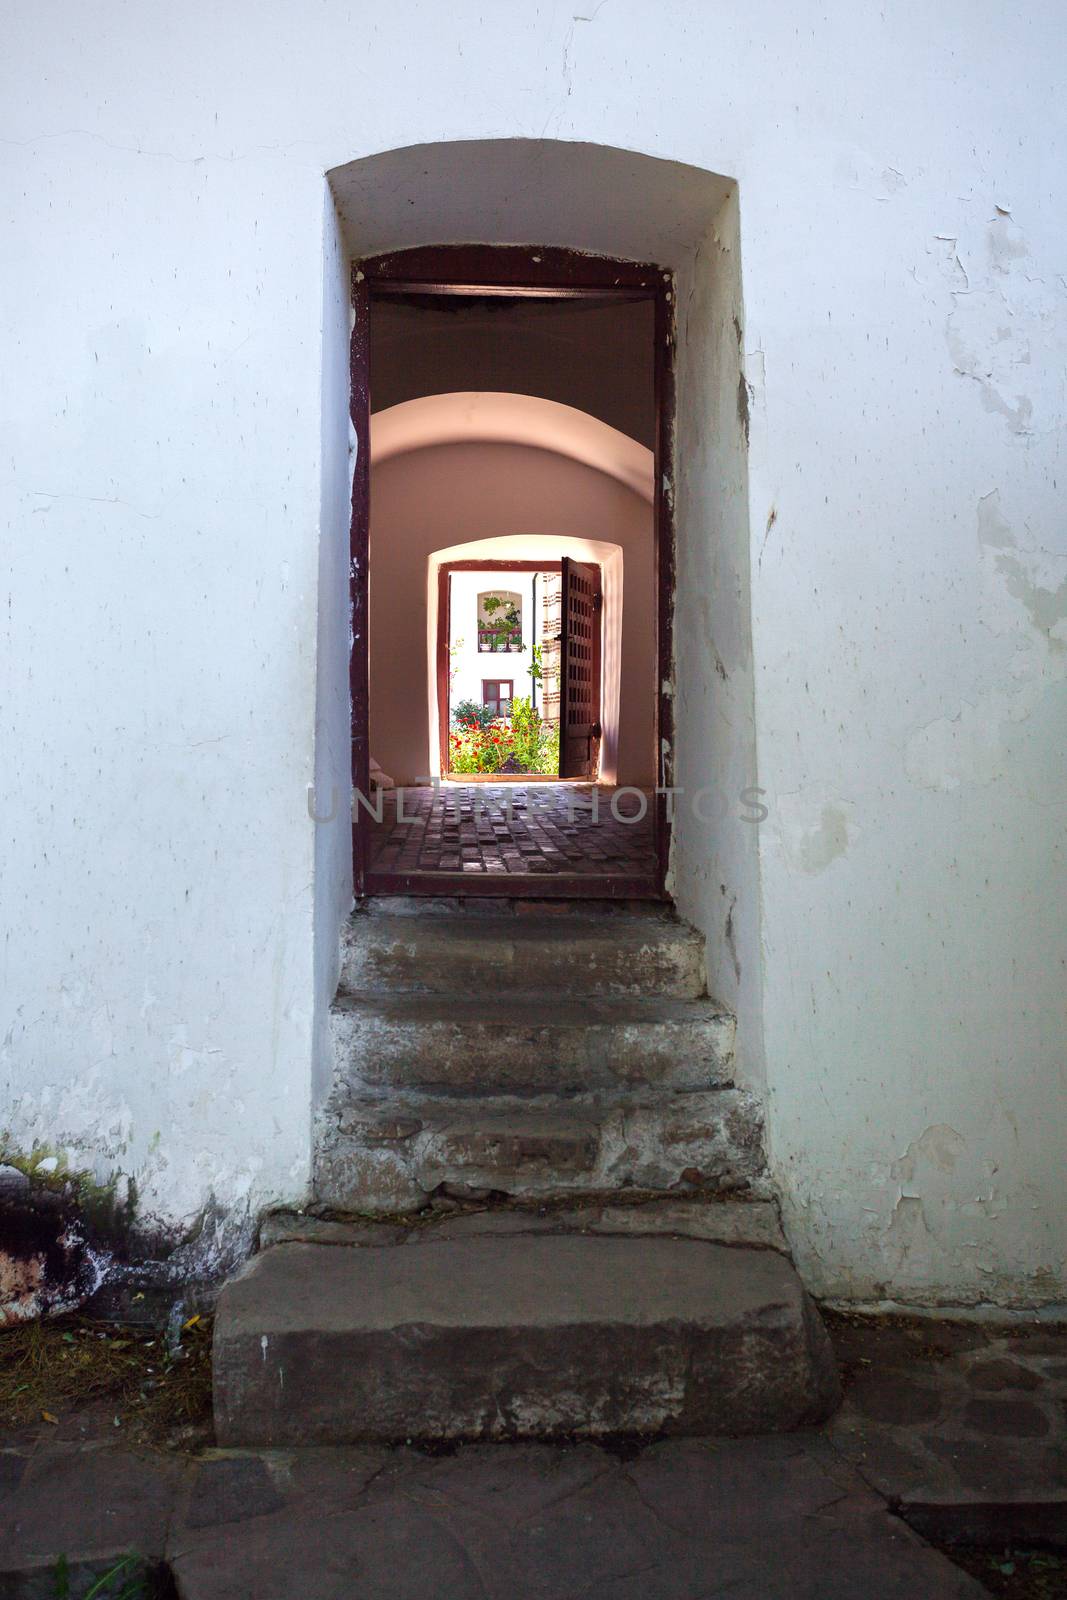 Cozia, Romania - Septemper 2, 2012: Doorway connecting the courtyards of  Cozia monastery housing the tomb of Mircea the Elder, Romania